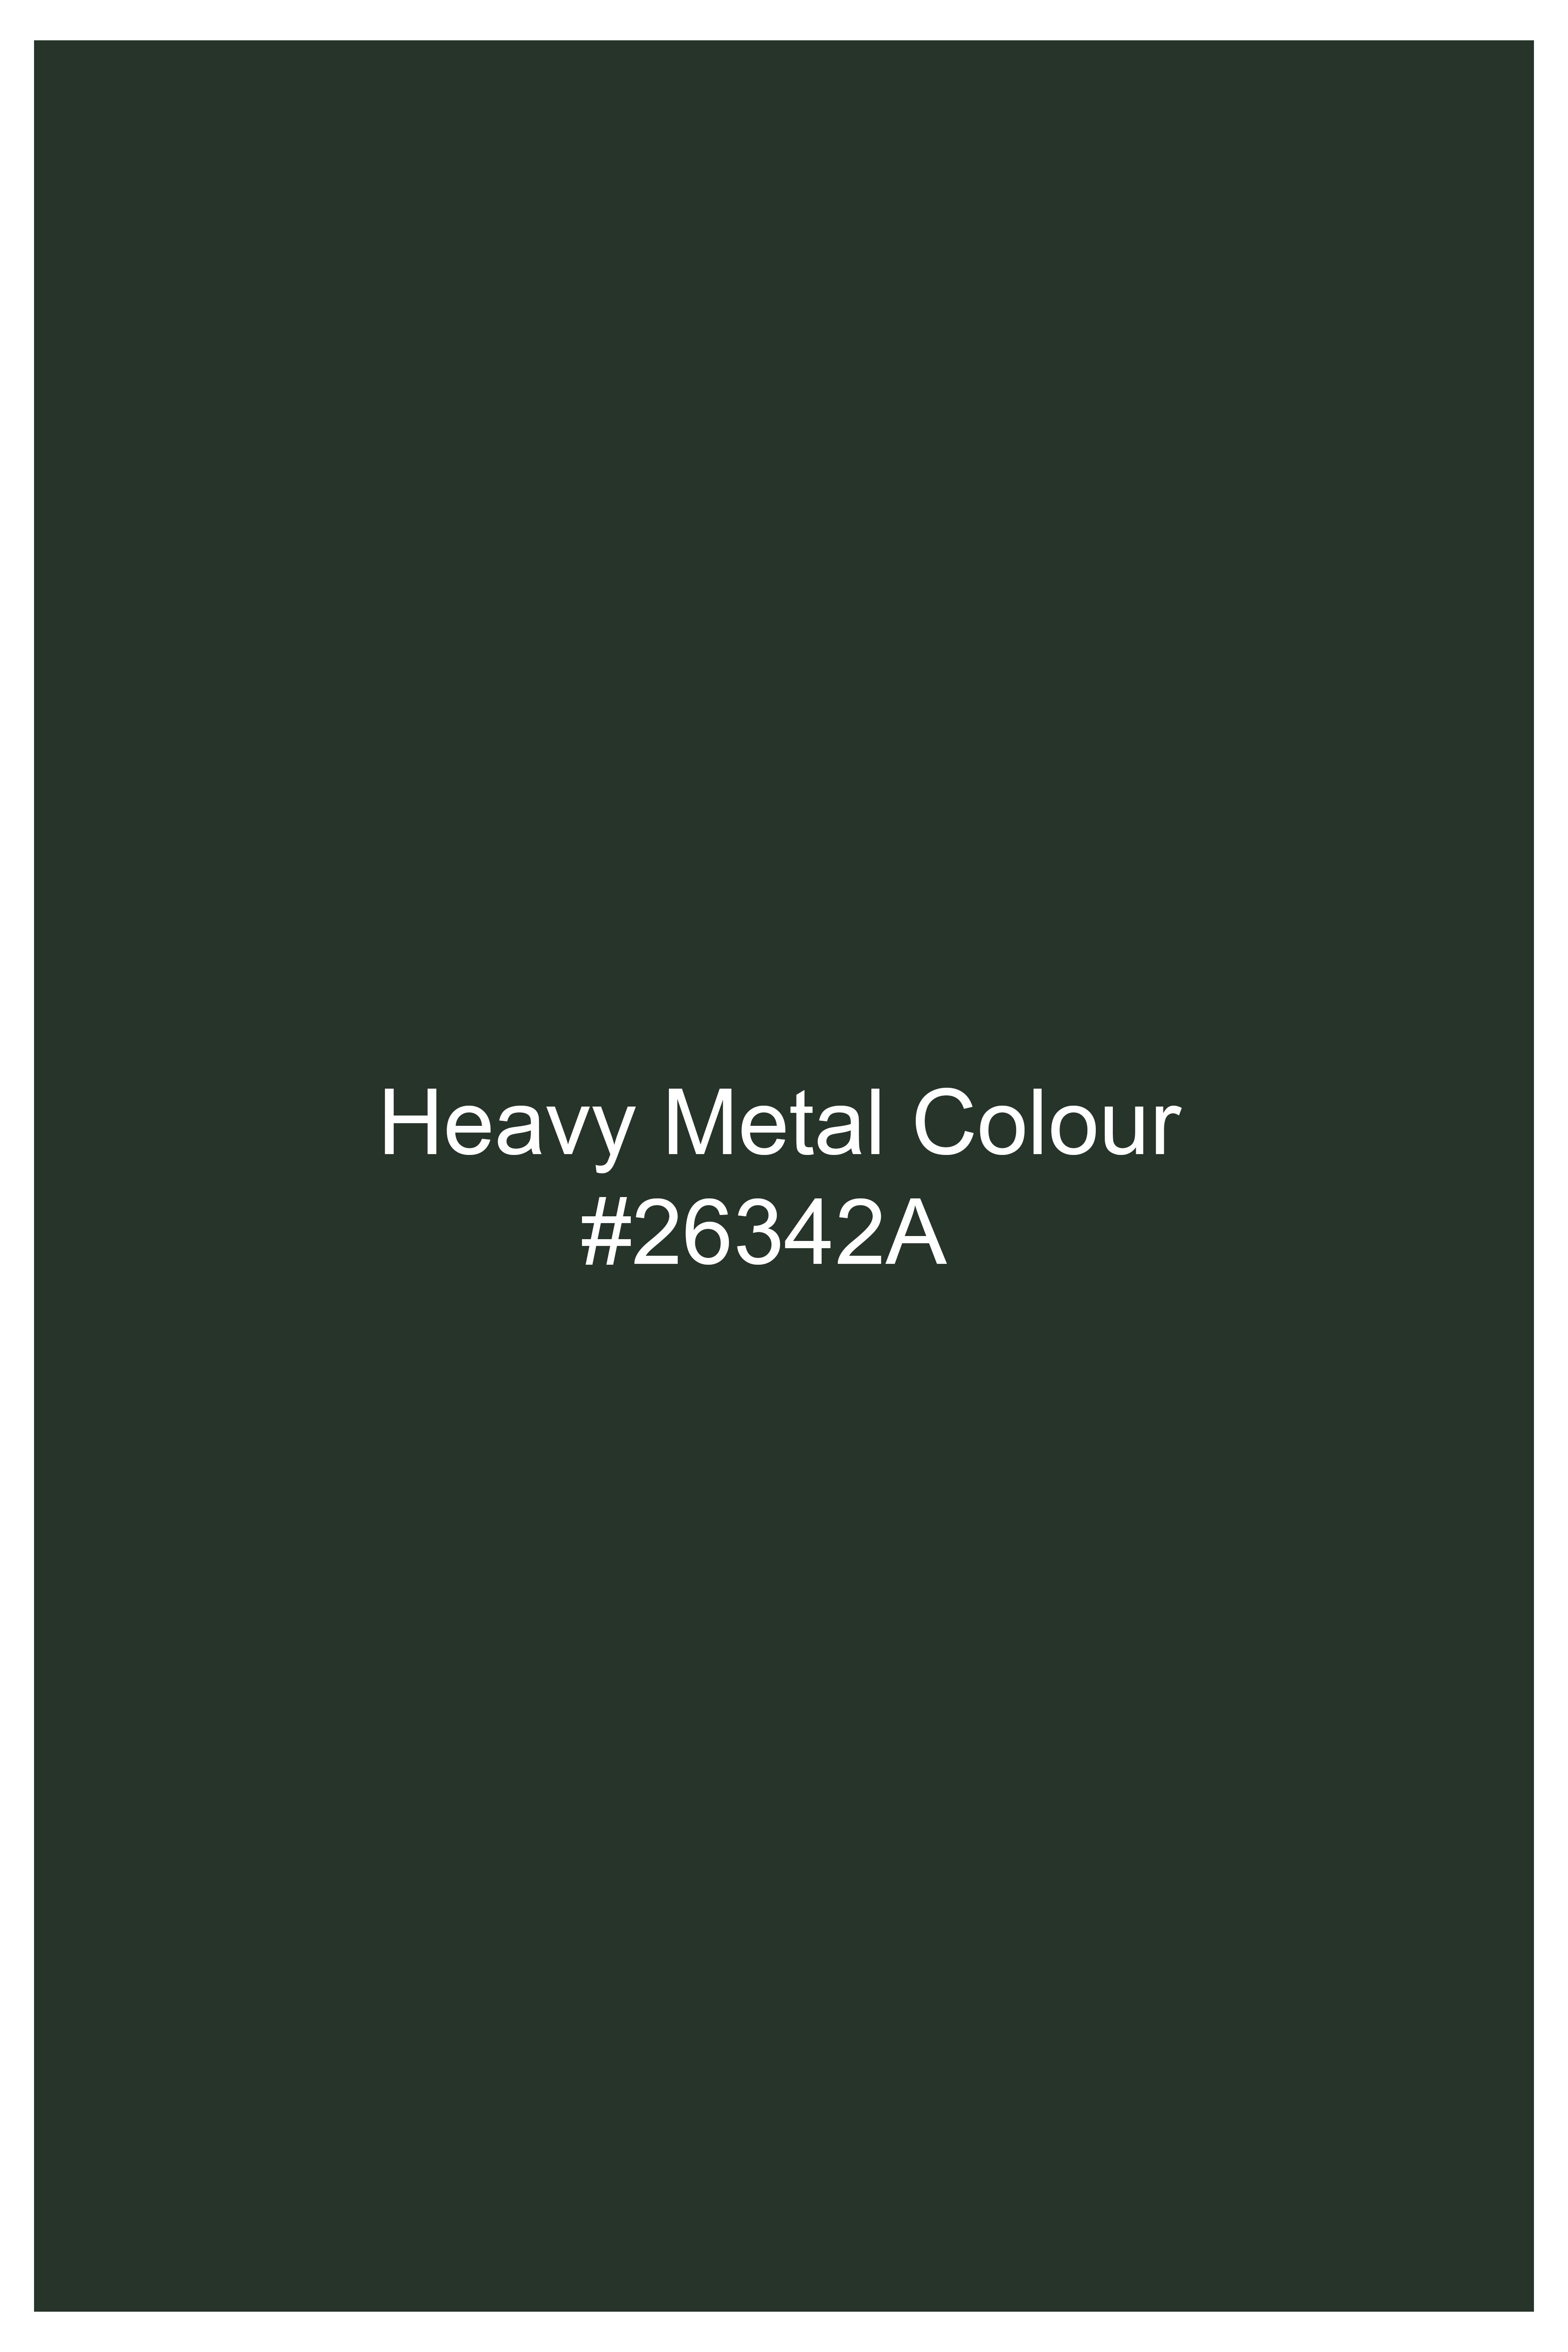 Heavy Metal Green Premium Cotton Bandhgala Stretchable Traveler Blazer BL2776-BG-36, BL2776-BG-38, BL2776-BG-40, BL2776-BG-42, BL2776-BG-44, BL2776-BG-46, BL2776-BG-48, BL2776-BG-50, BL2776-BG-52, BL2776-BG-54, BL2776-BG-56, BL2776-BG-58, BL2776-BG-60